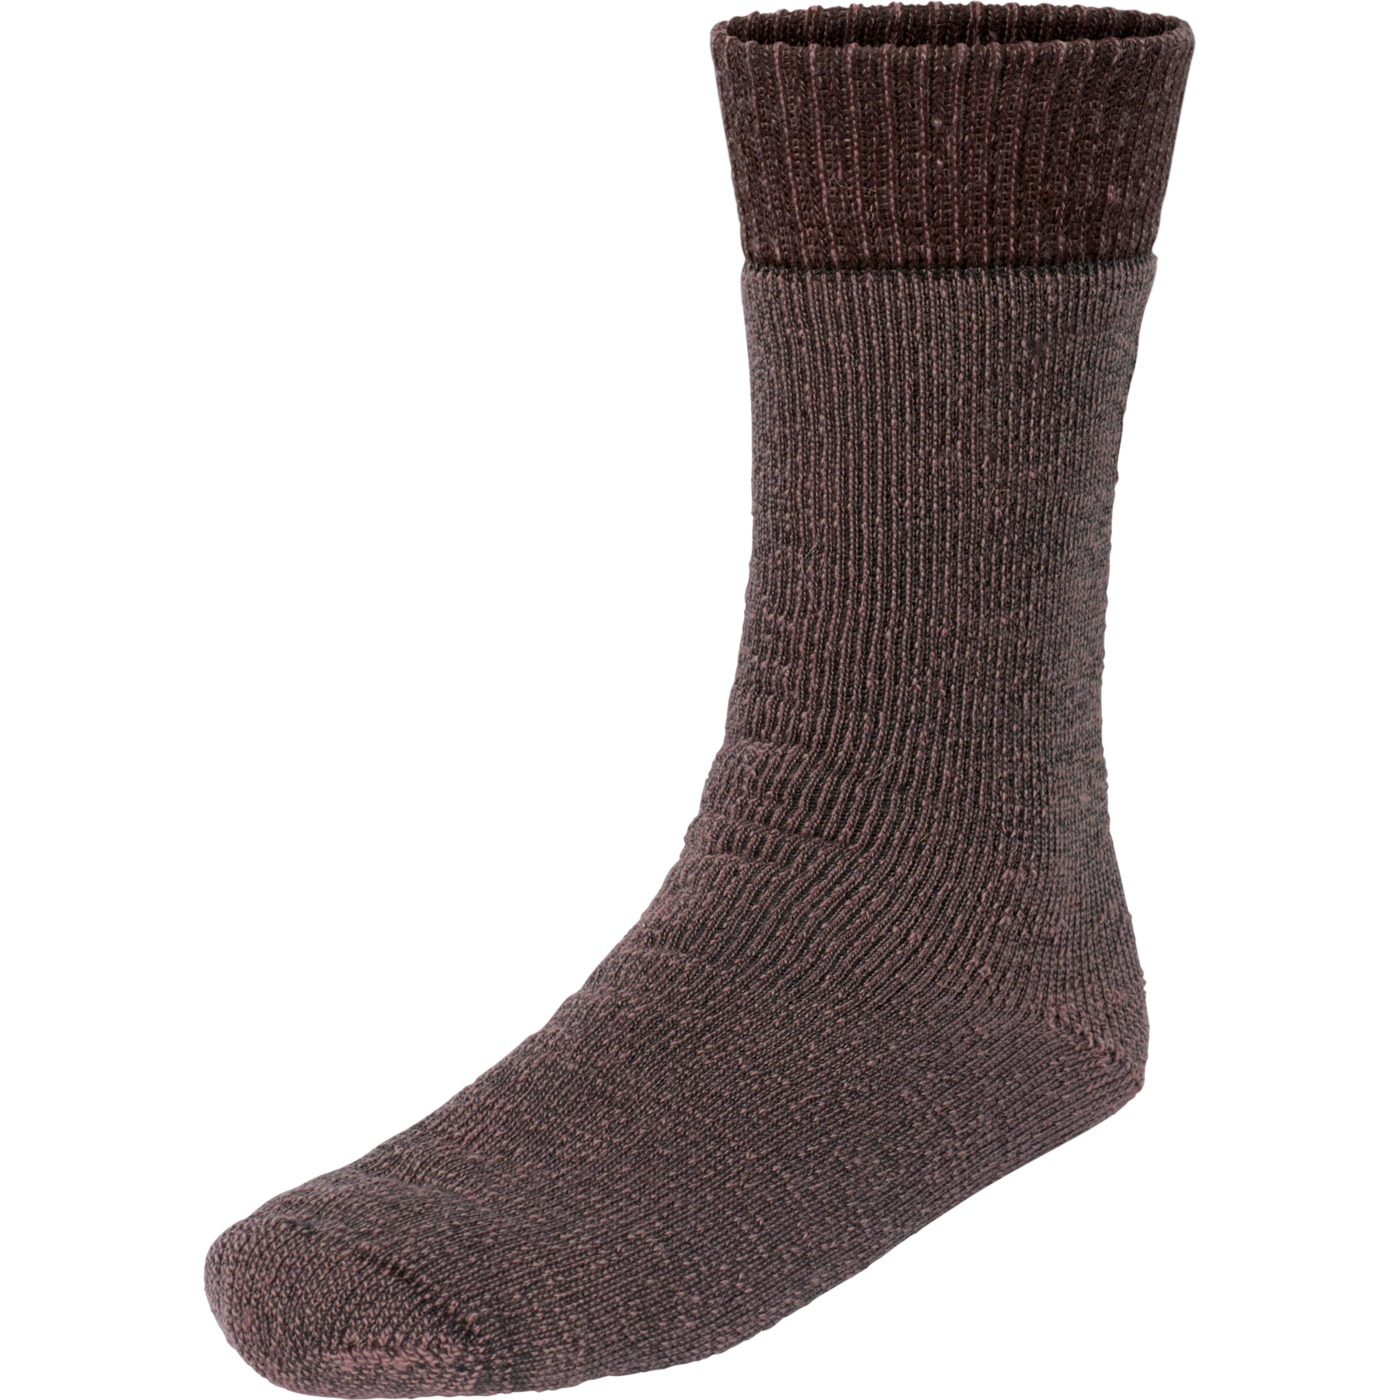 Seeland Climate Socks - Brown